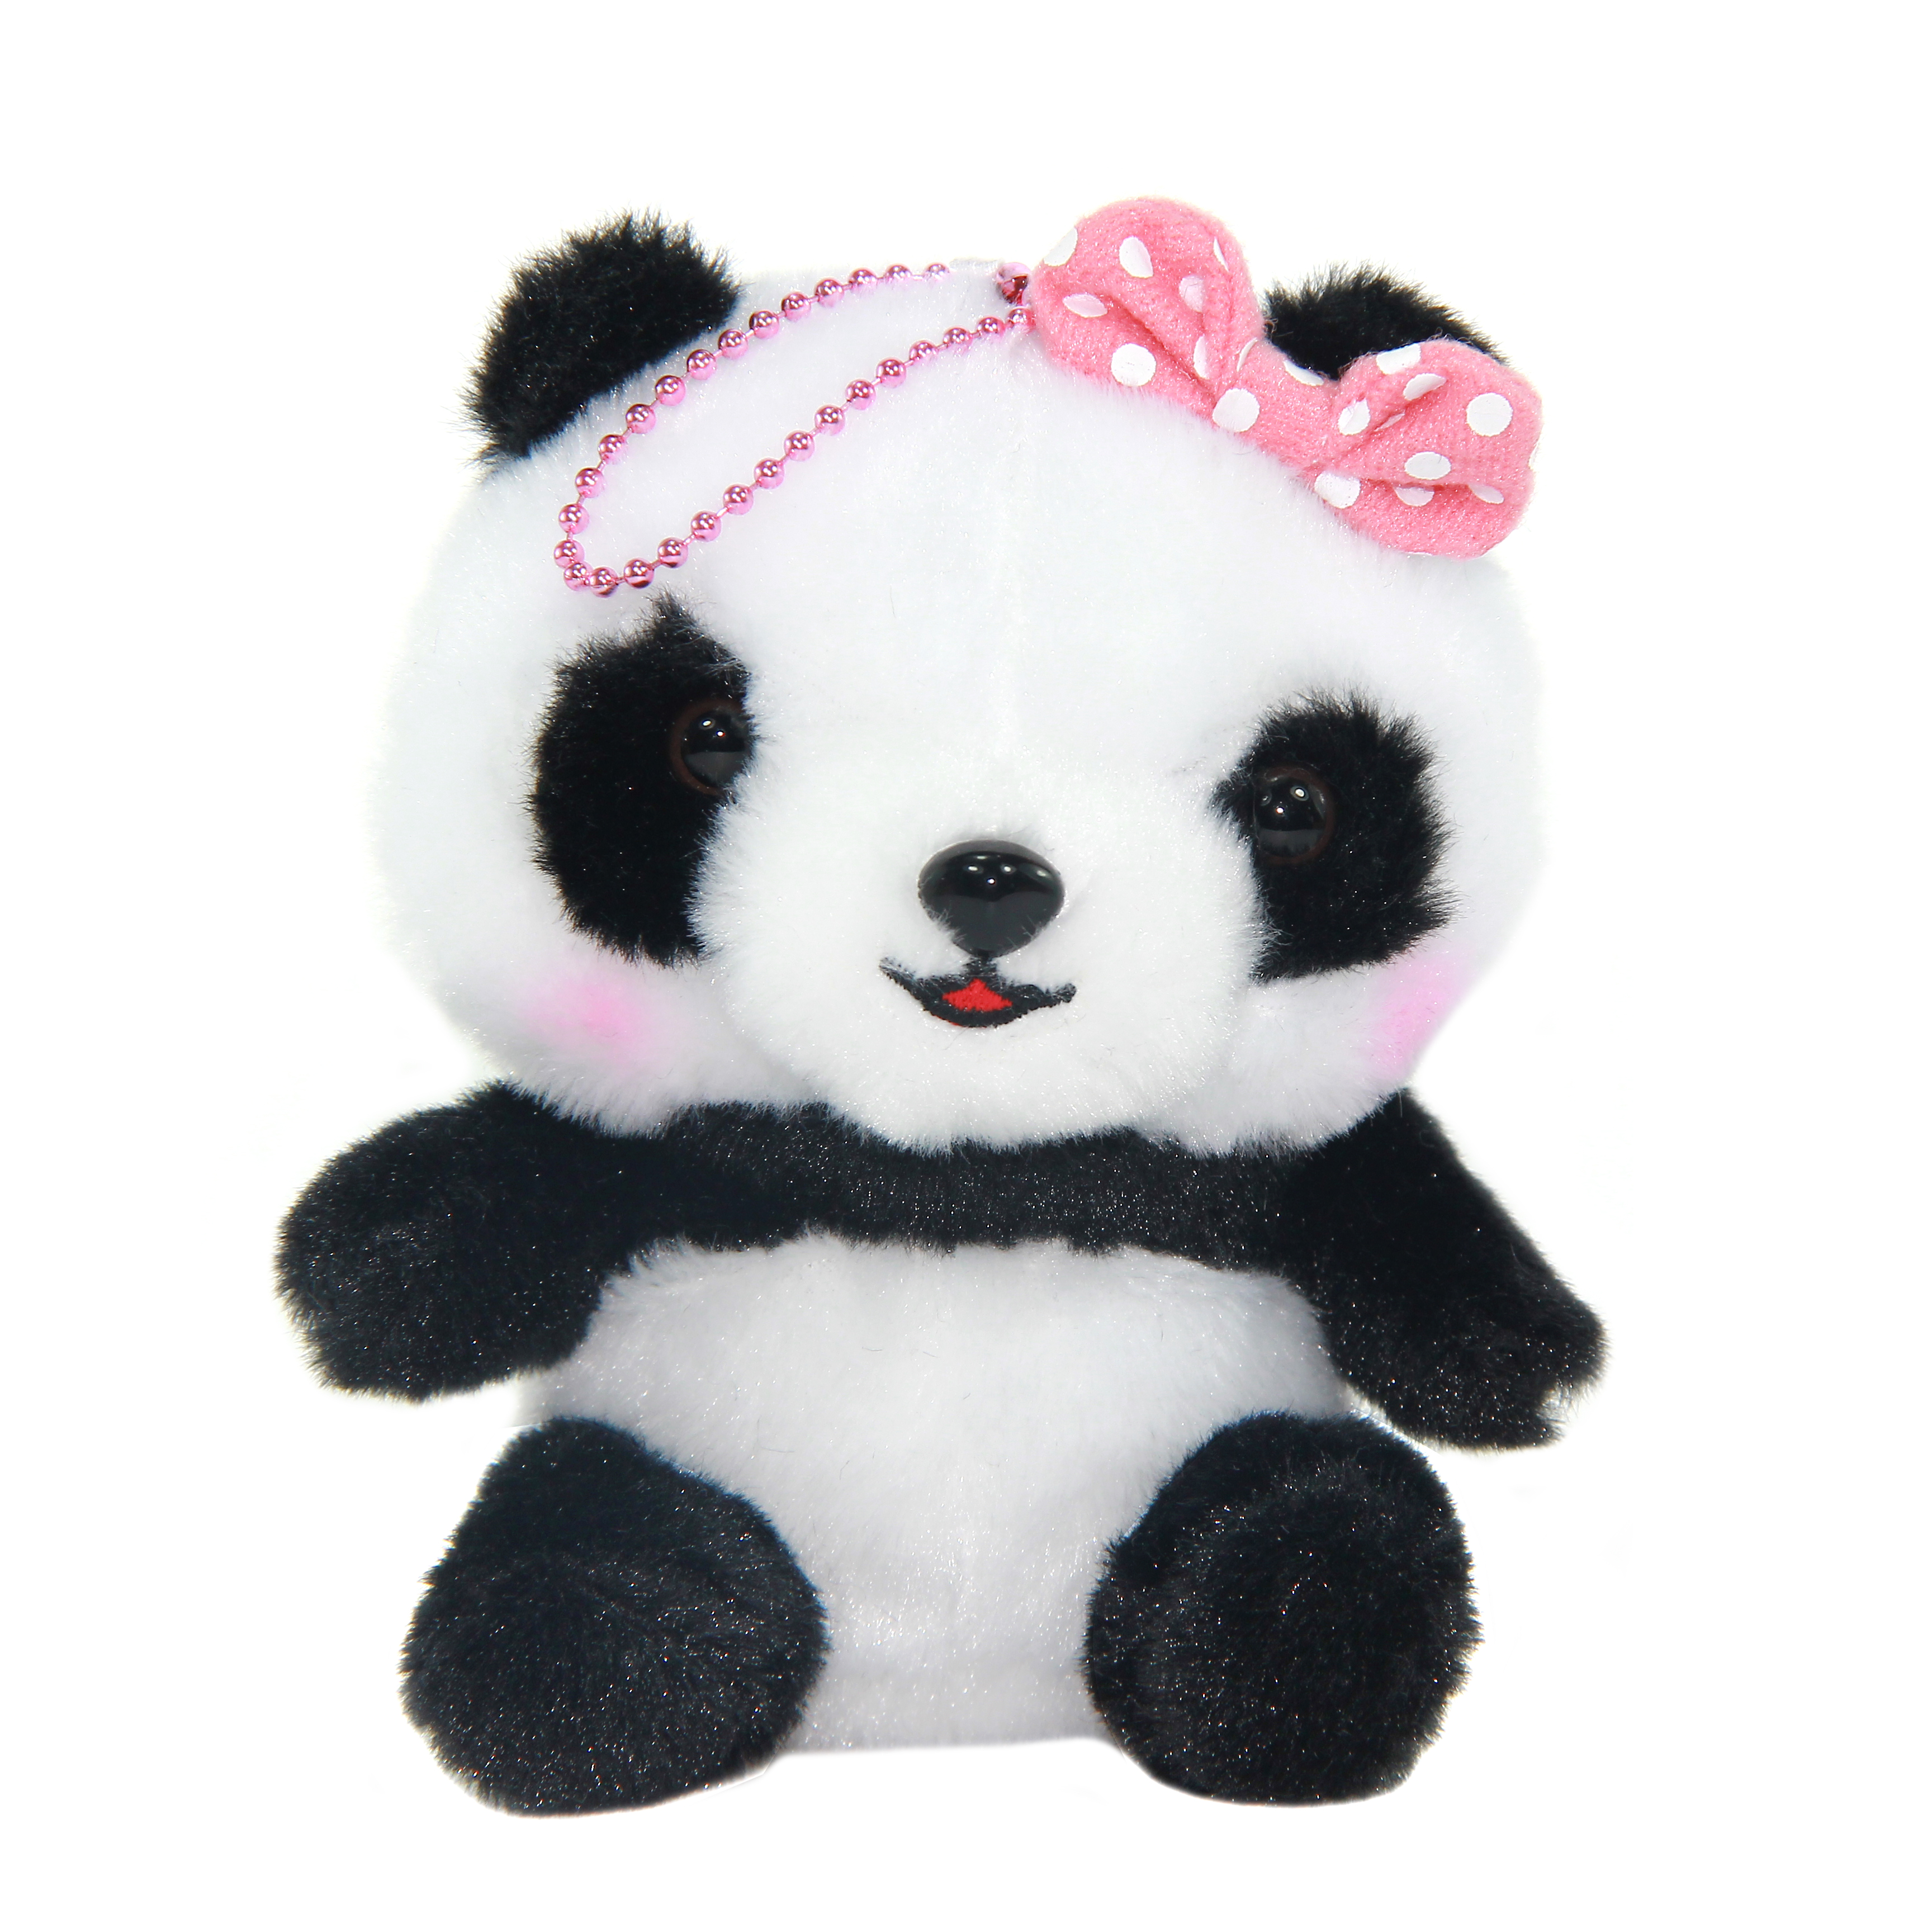 Plush Panda, Amuse, Honwaka Panda Baby, Panda Girl, Black / White, 5 Inches